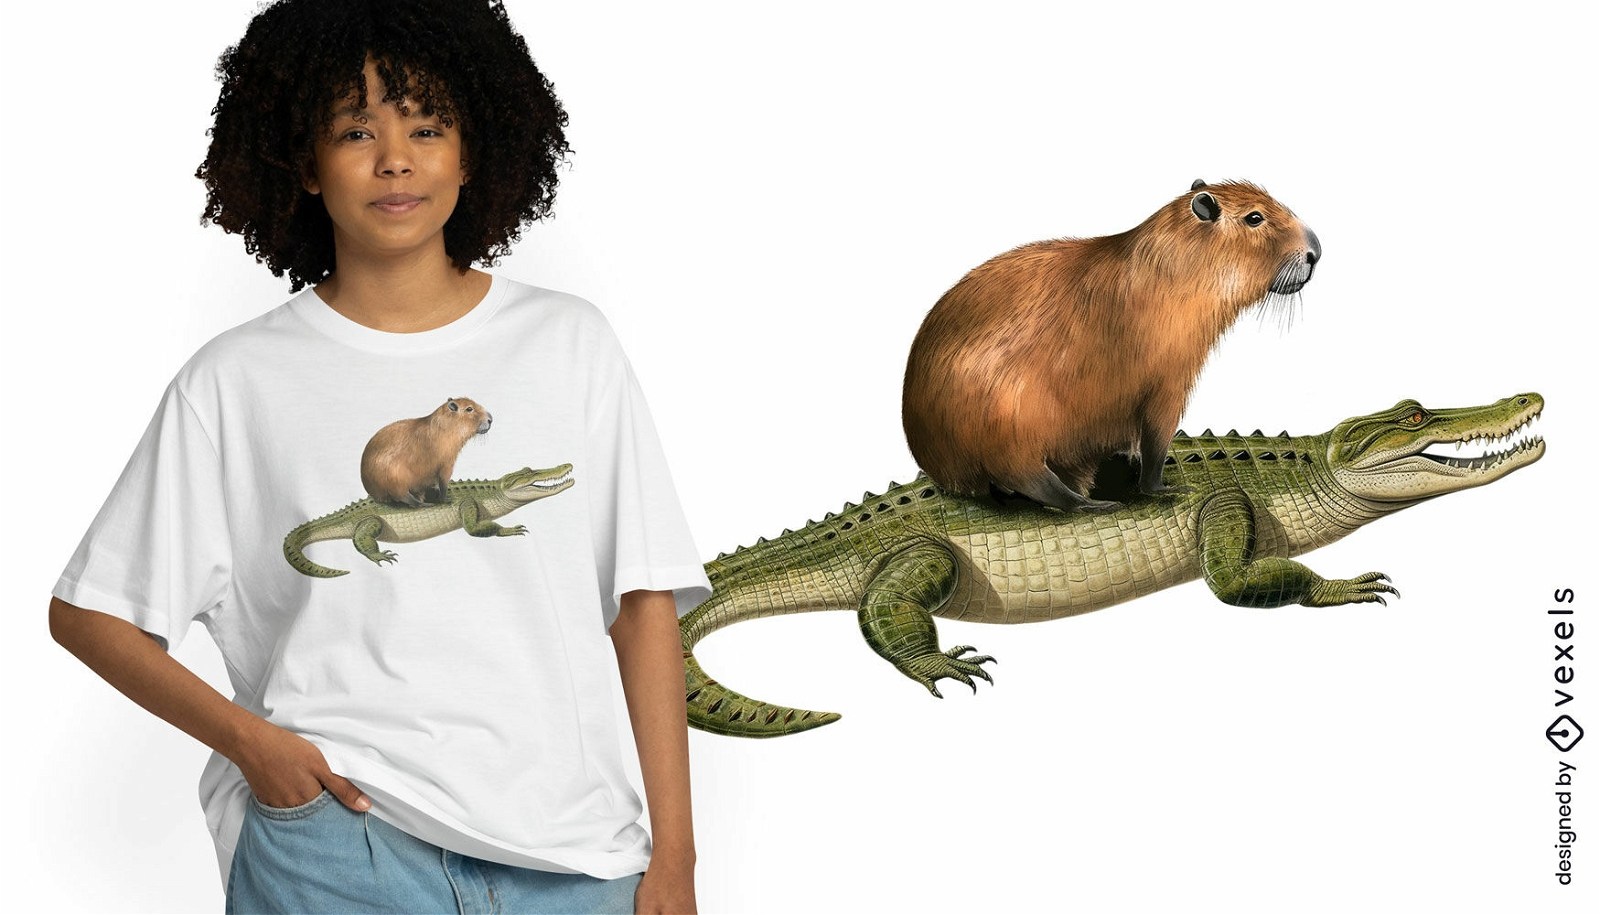 Capybara and crocodile t-shirt design